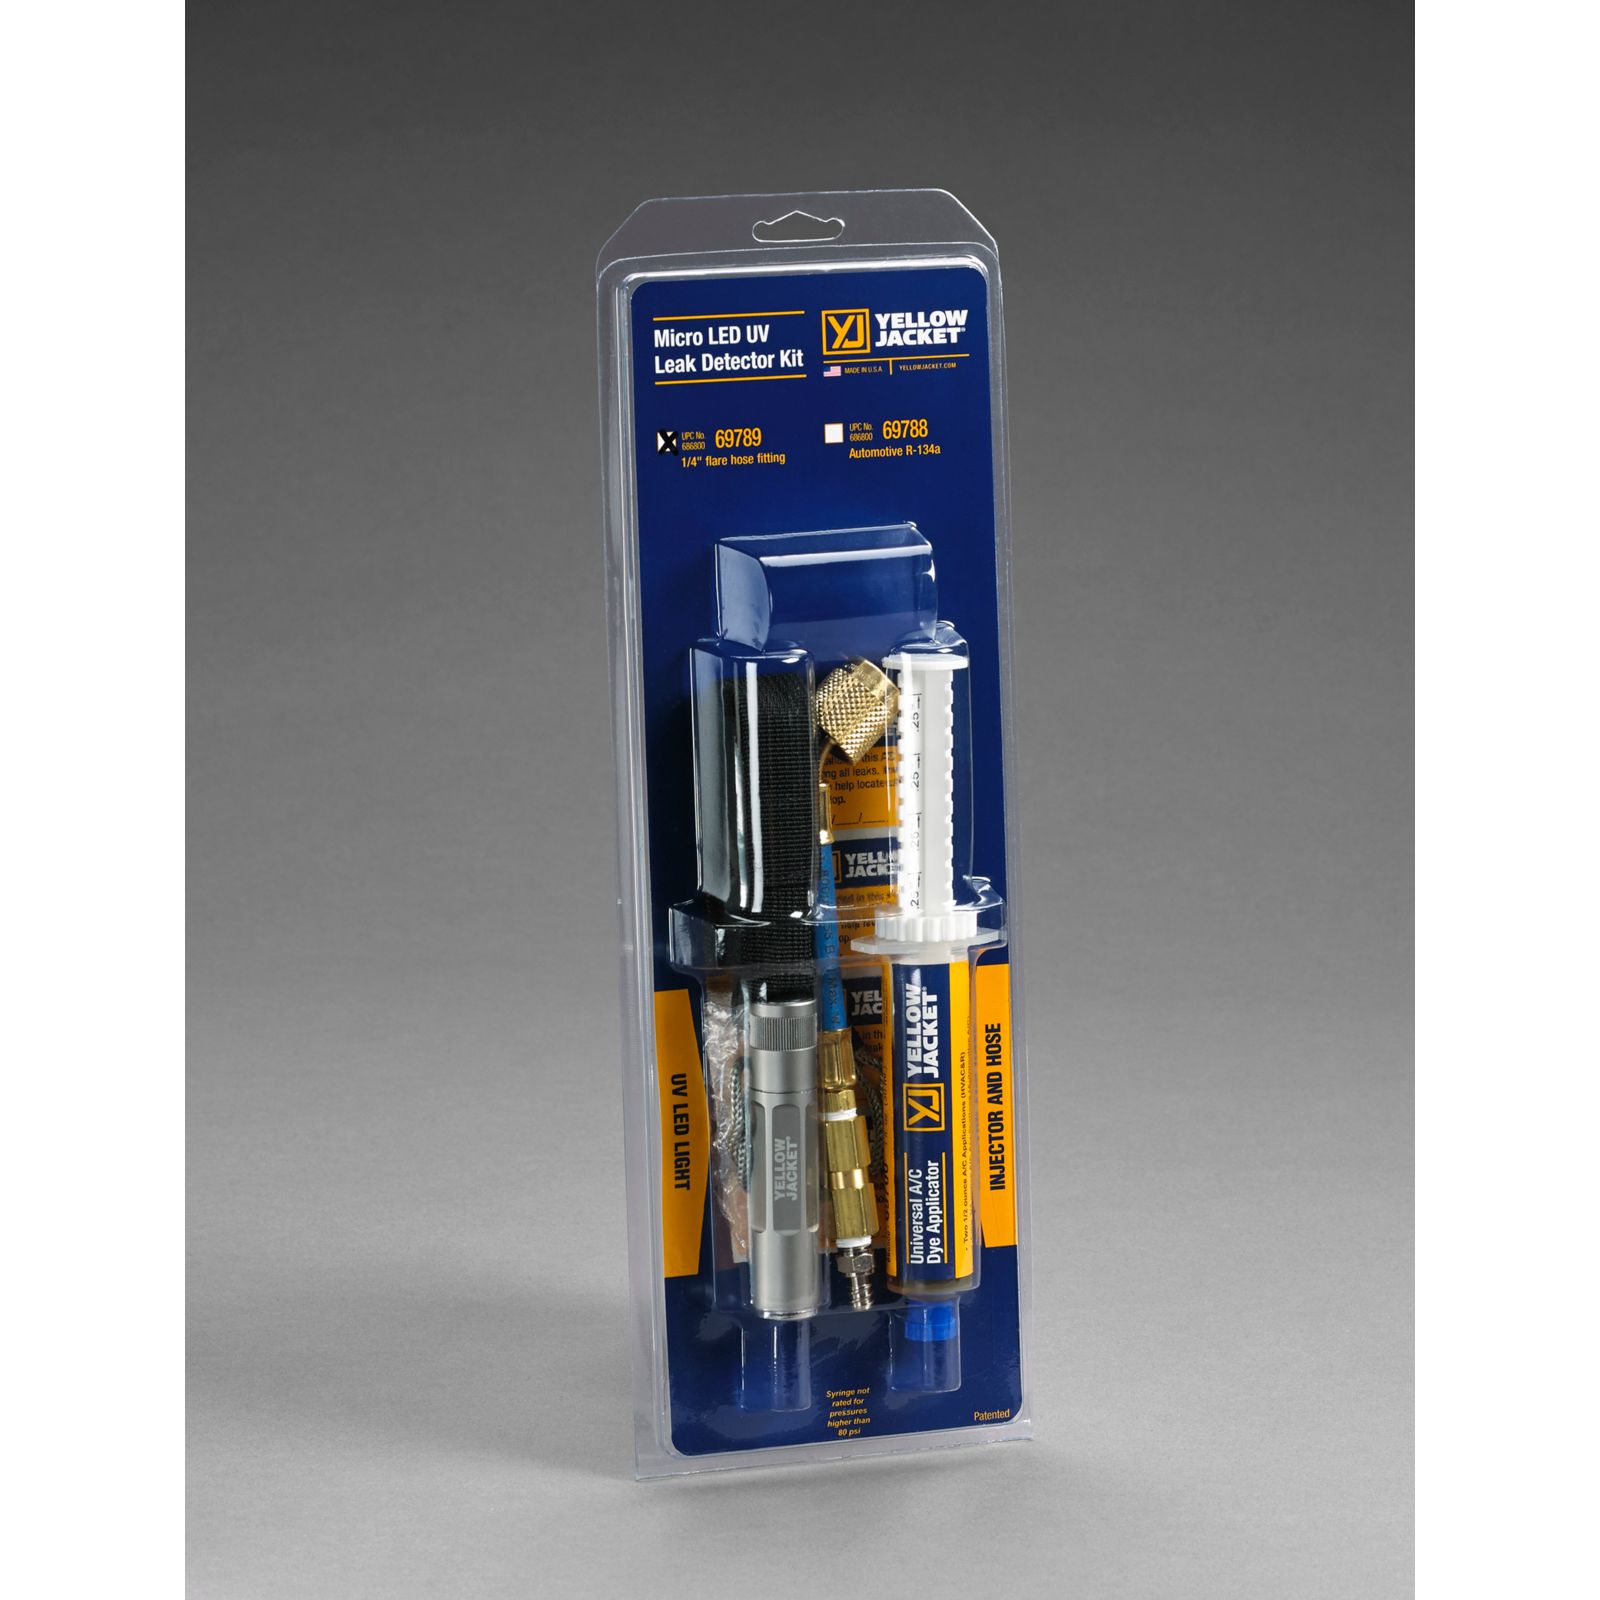 Yellow Jacket 69789 - Micro LED Flashlight UV Leak Detection Kit for A/C